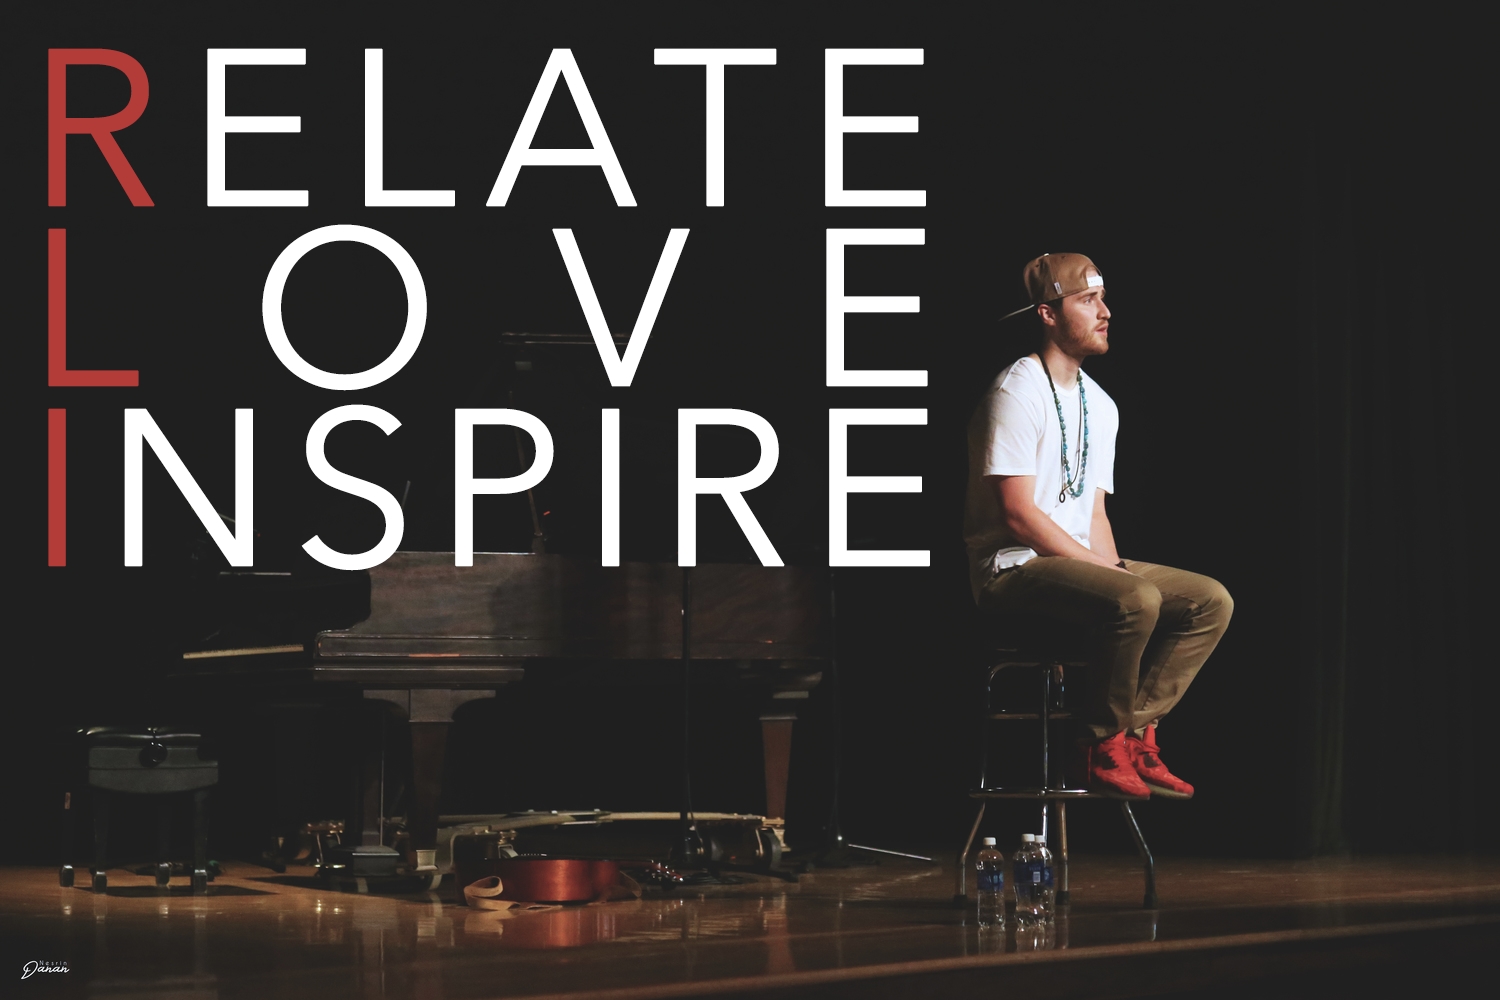 Mike Posner's moto "Relate Love Inspire"
